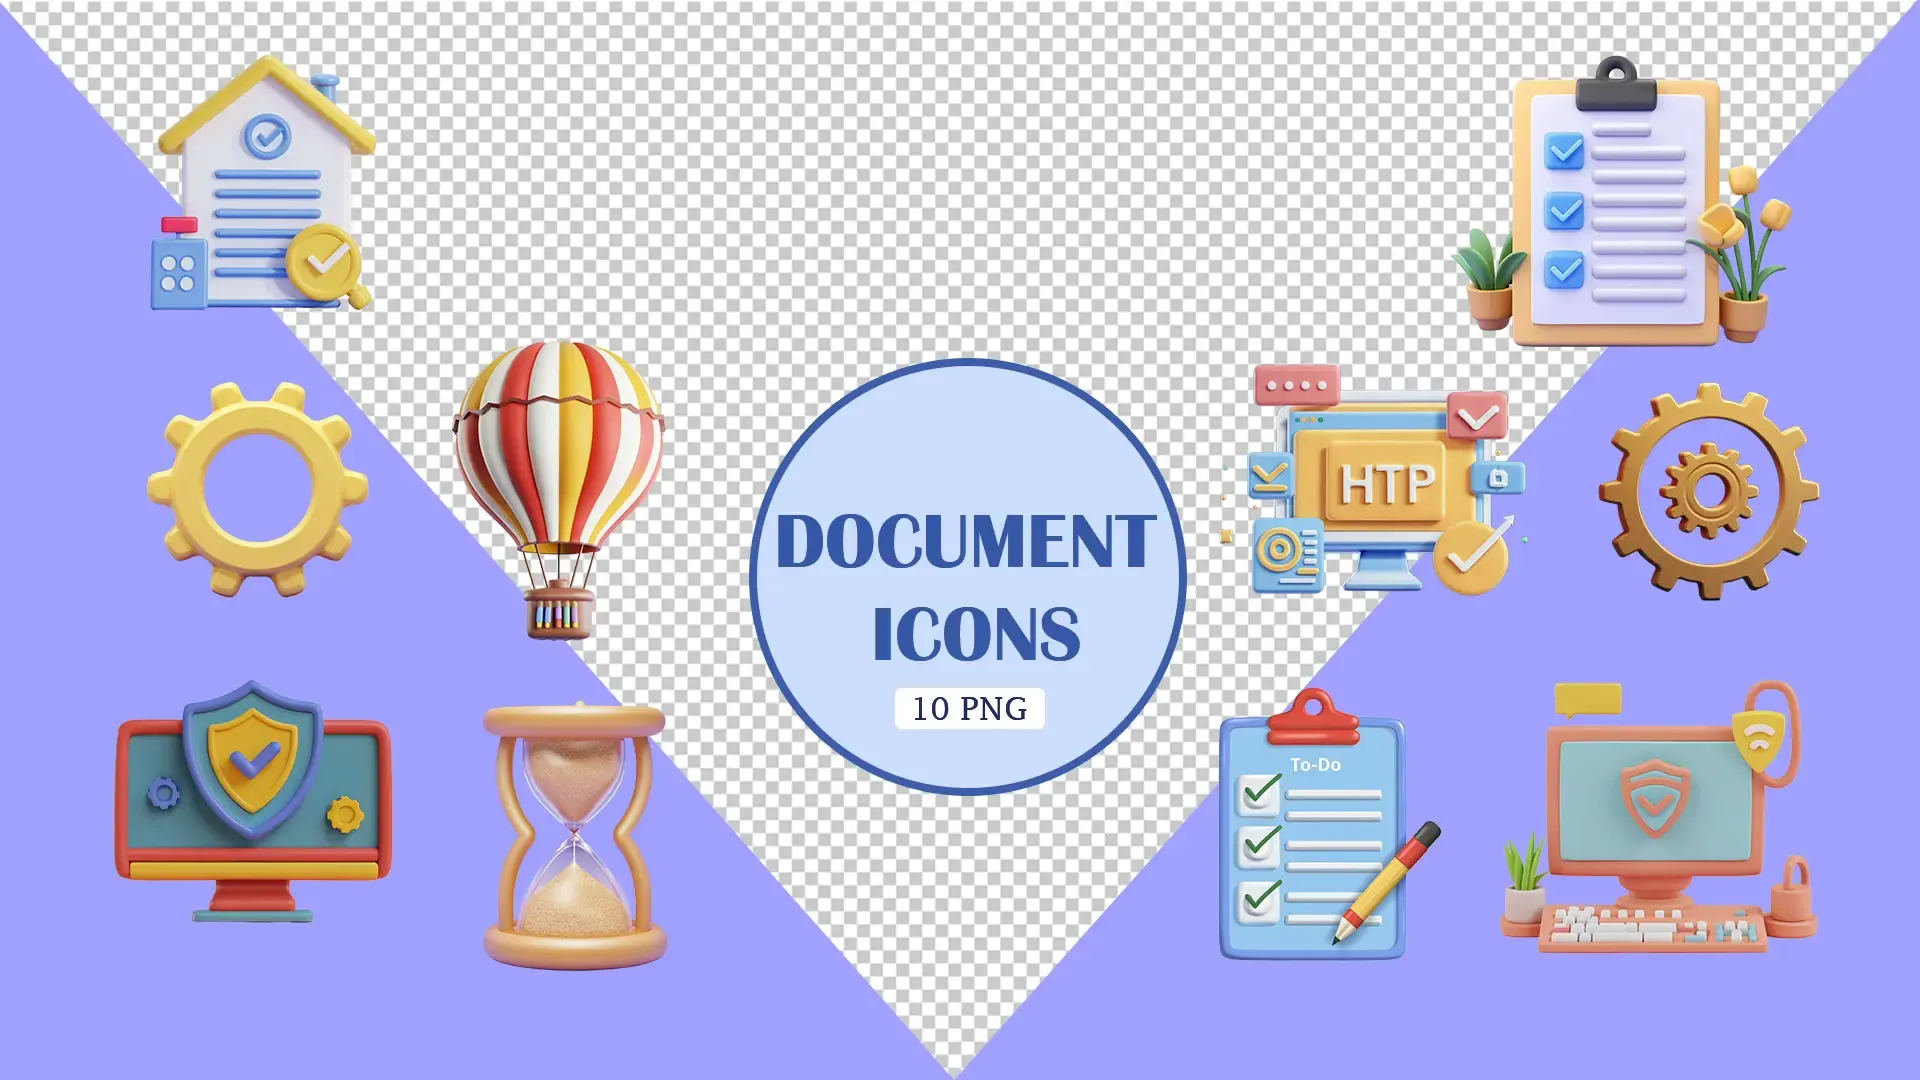 Essential Document Icons 3D Elements Set image